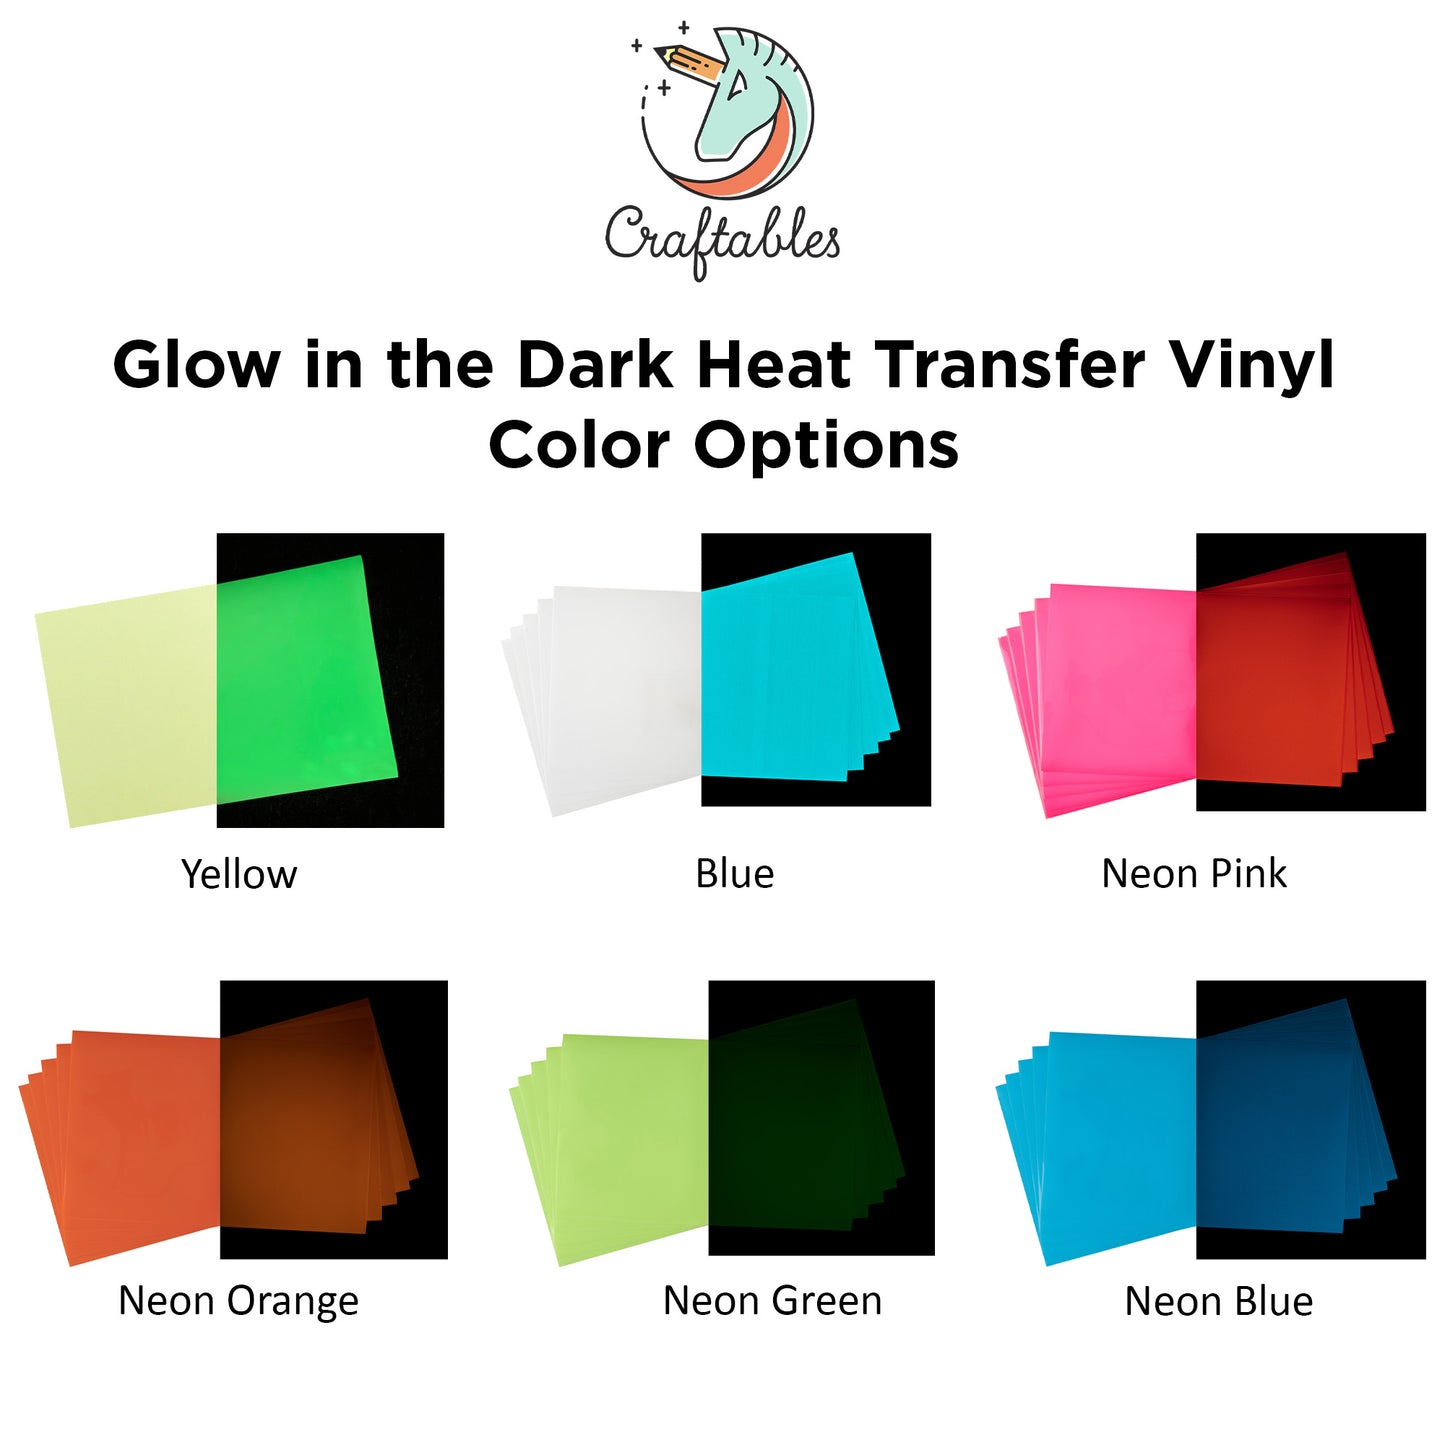 Neon Blue Glow in the Dark Heat Transfer Vinyl Rolls By Craftables